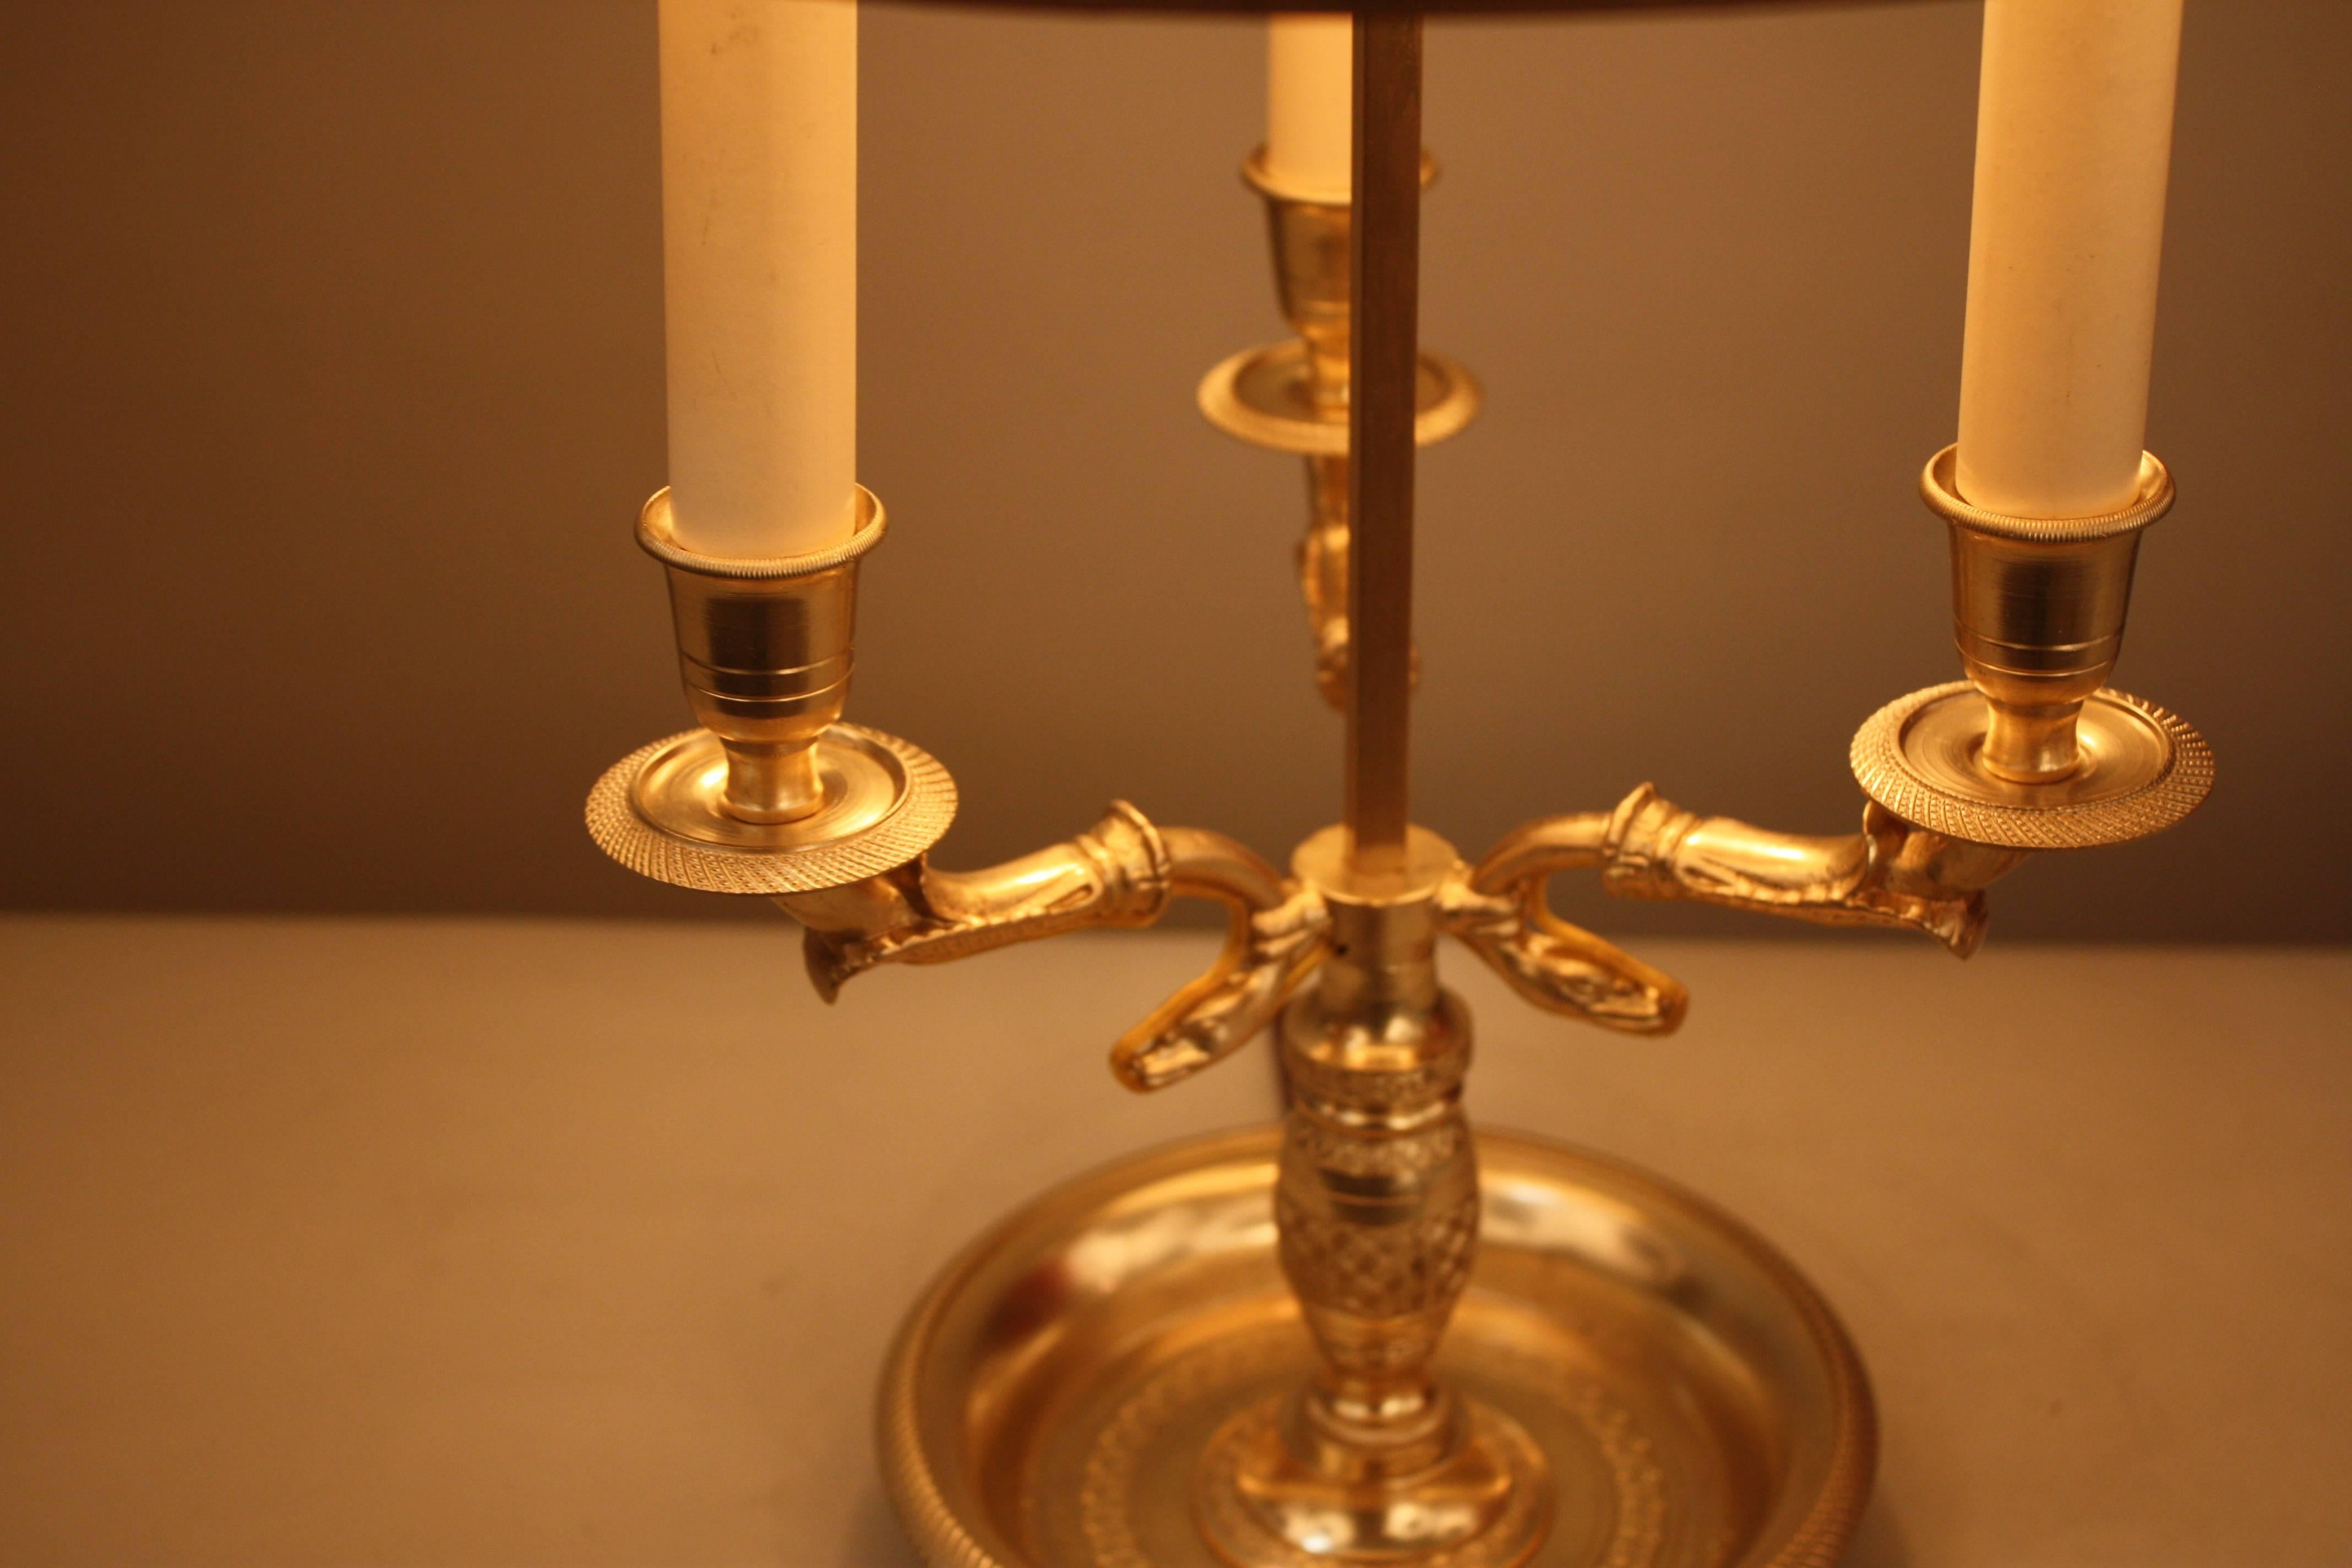 French Empire style three-light bronze table lamp with dark green metal lampshade.
60watt each light.